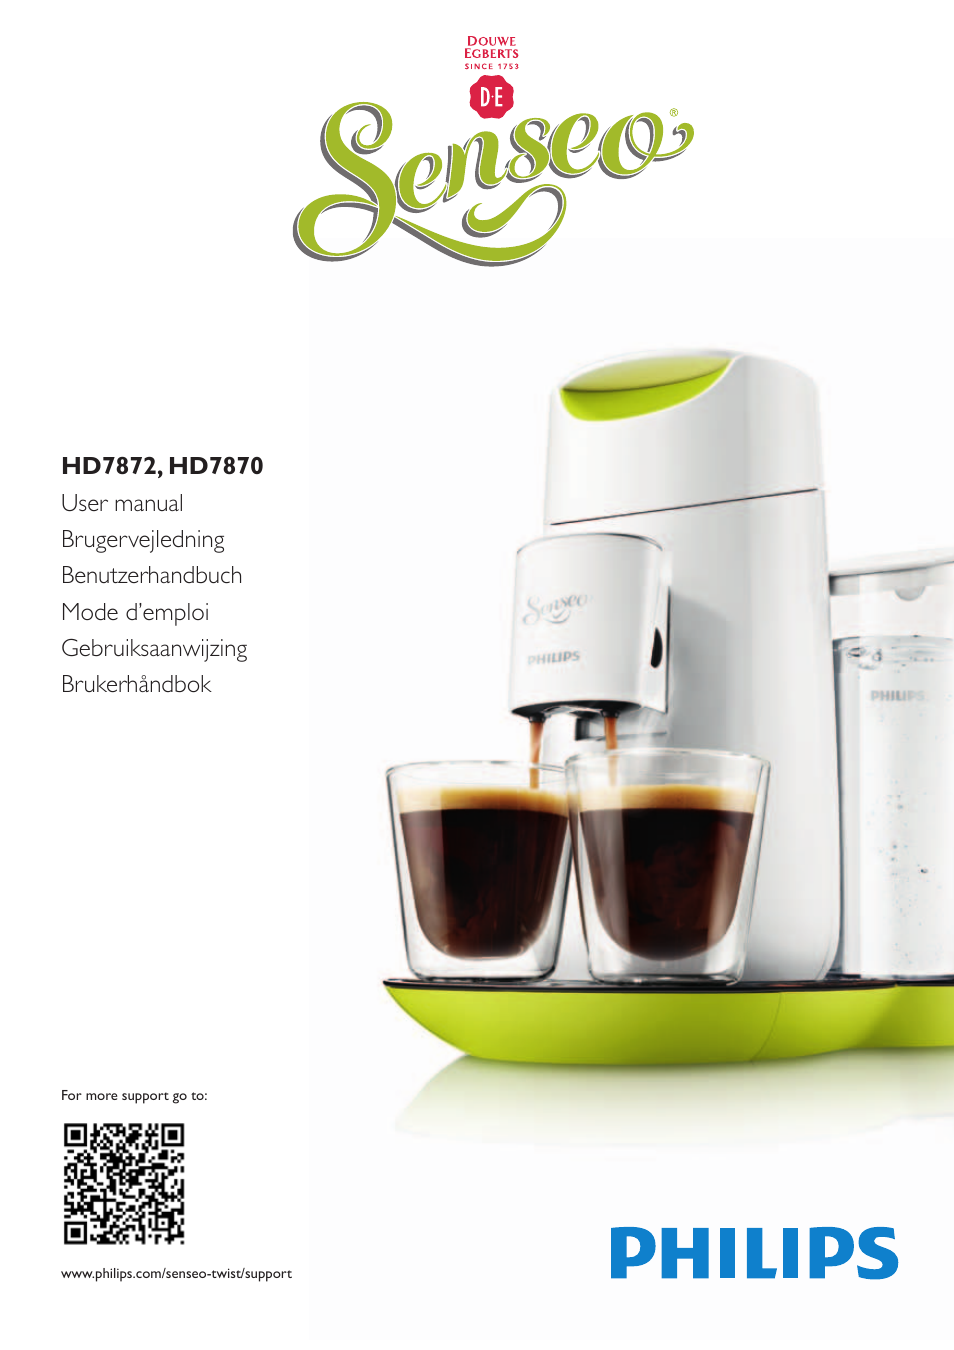 Philips SENSEO® Twist Kaffeepadmaschine User Manual | 110 pages